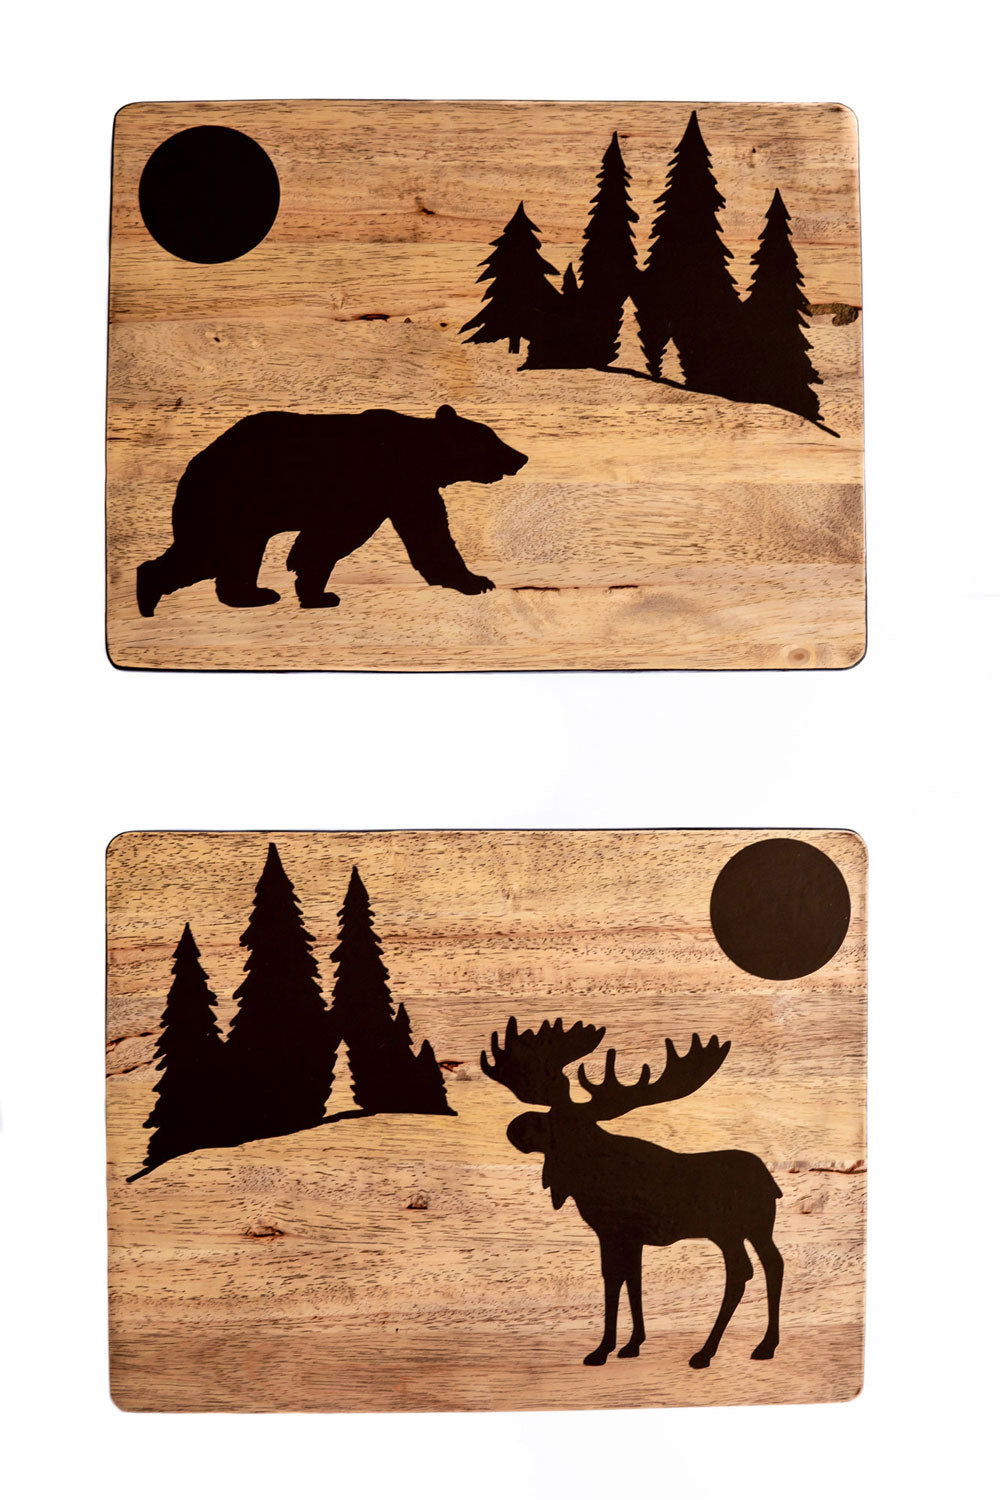 Moose and Bear, U.S. Made, TV Trays - Set of 4 by J. Thomas